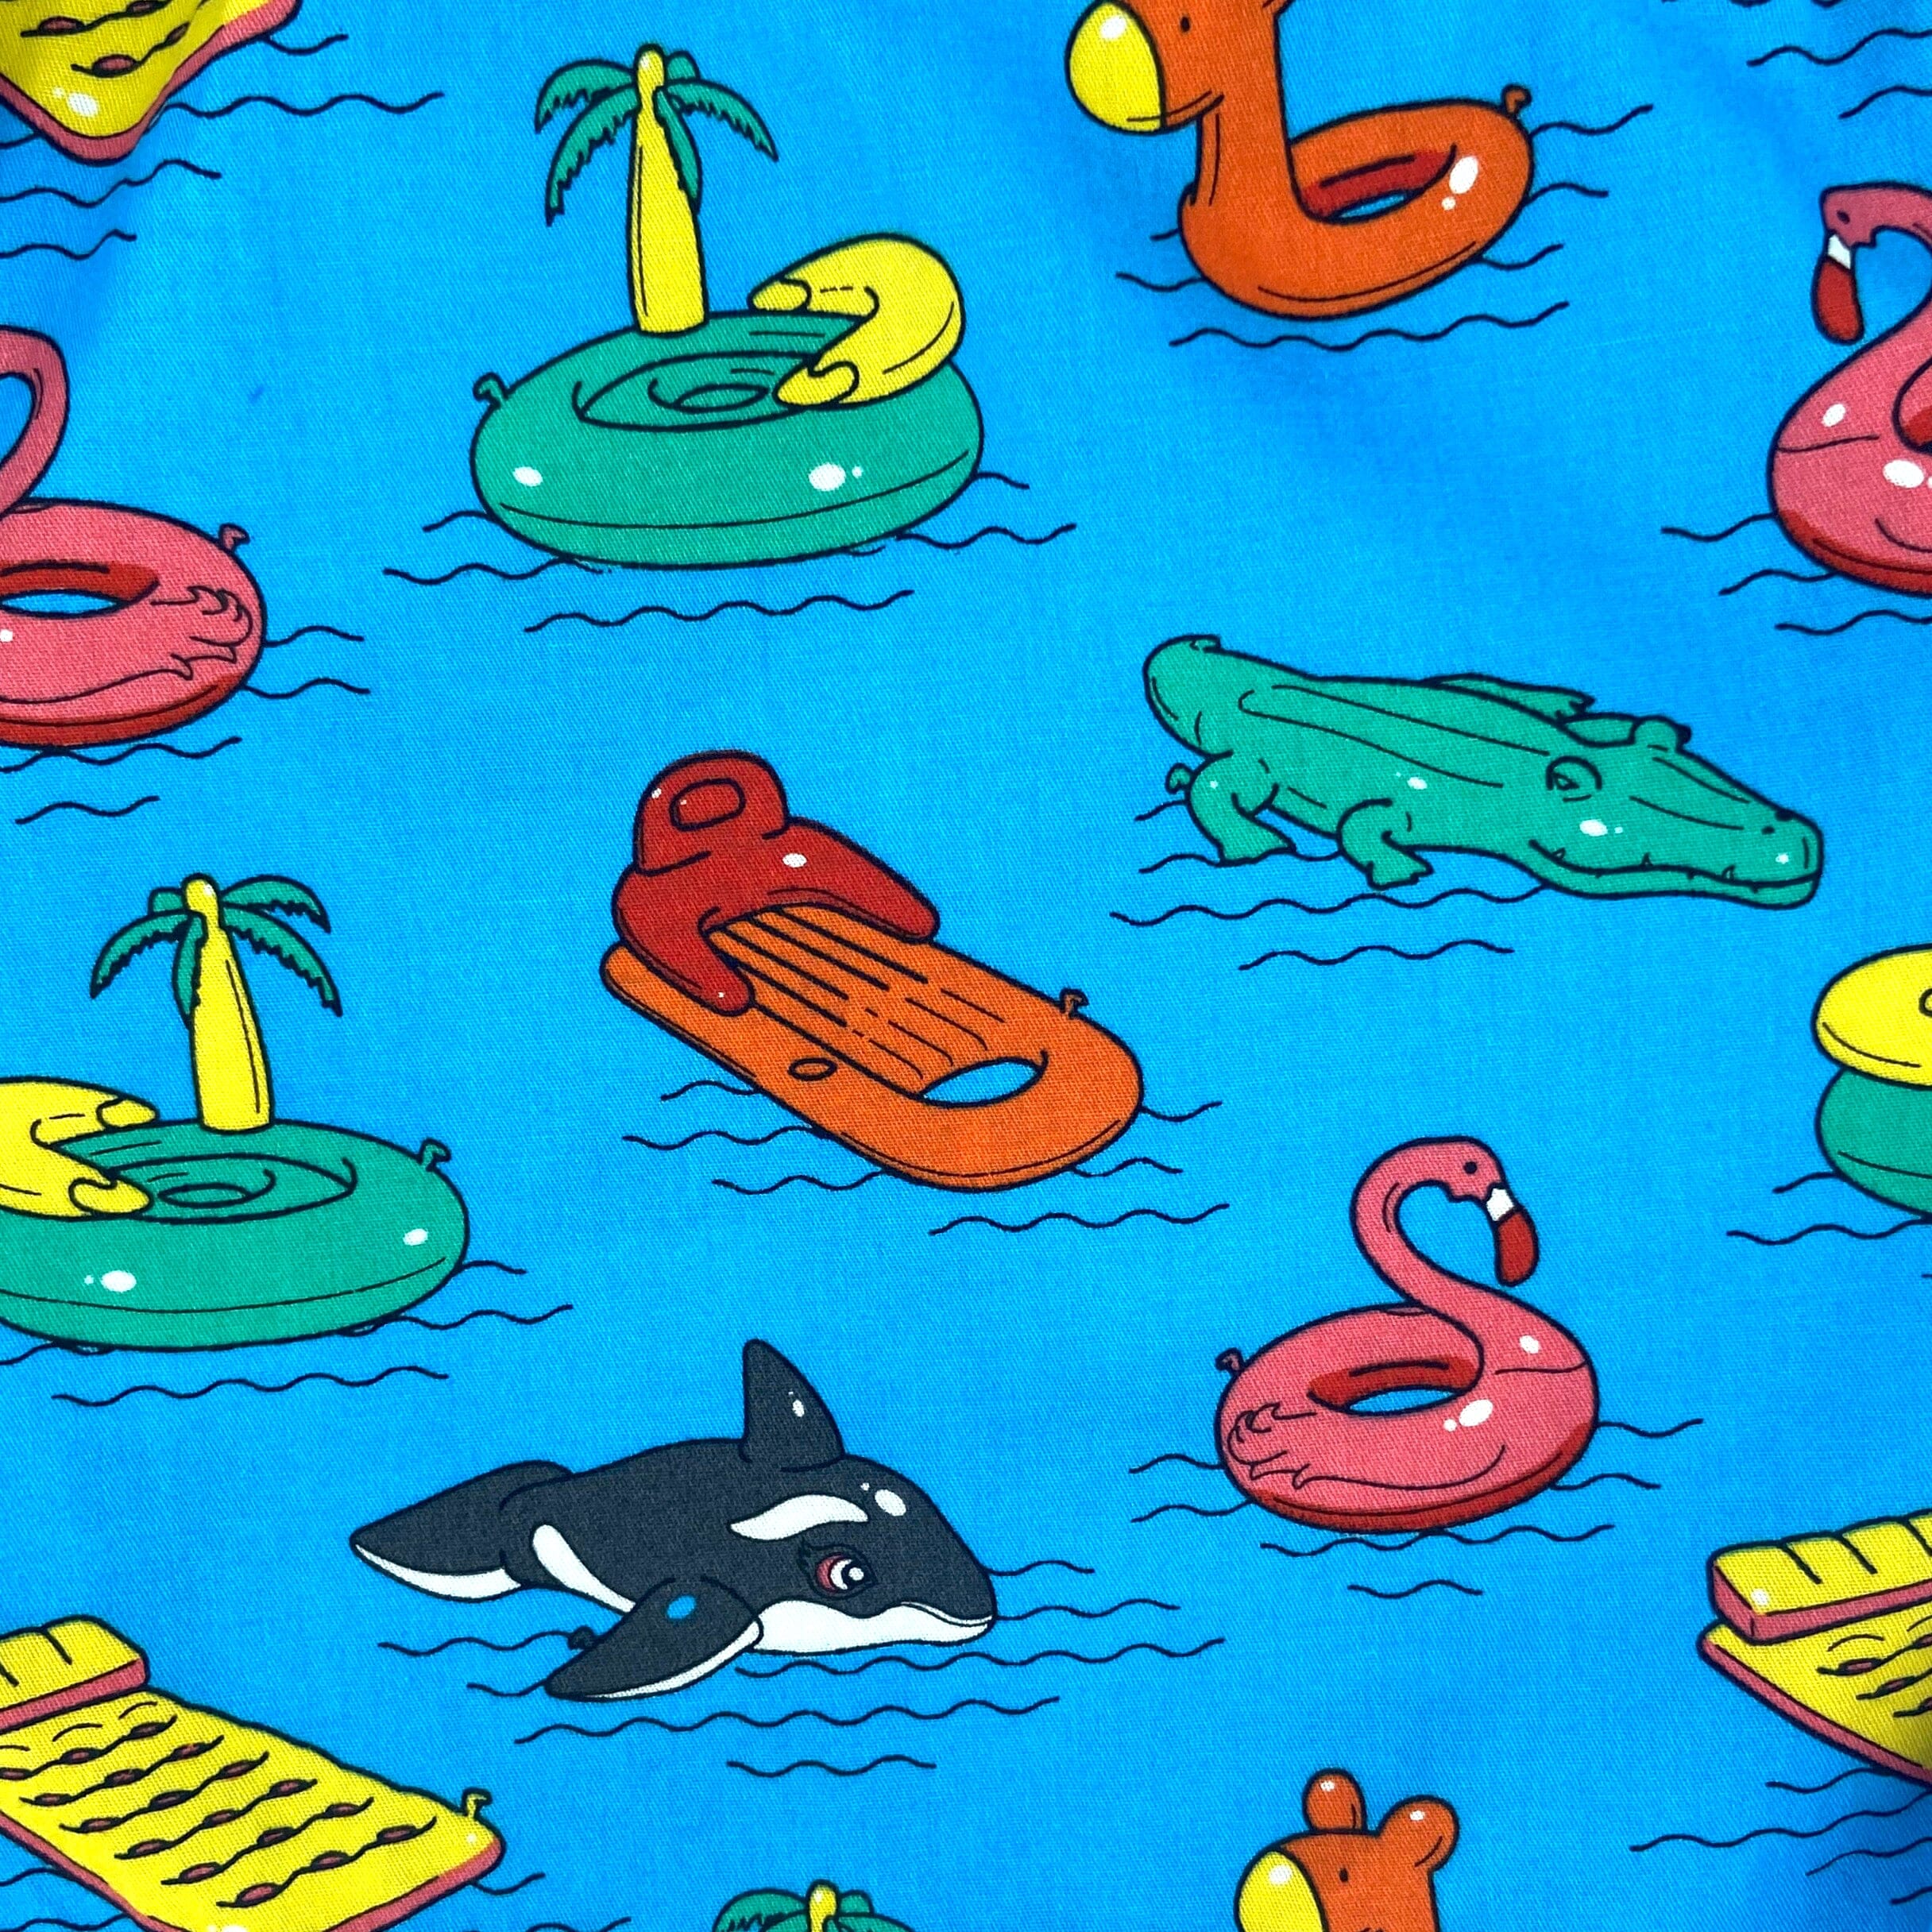 Men's Summer Beach Party Flamingo Pool Float Patterned Boxer Shorts 